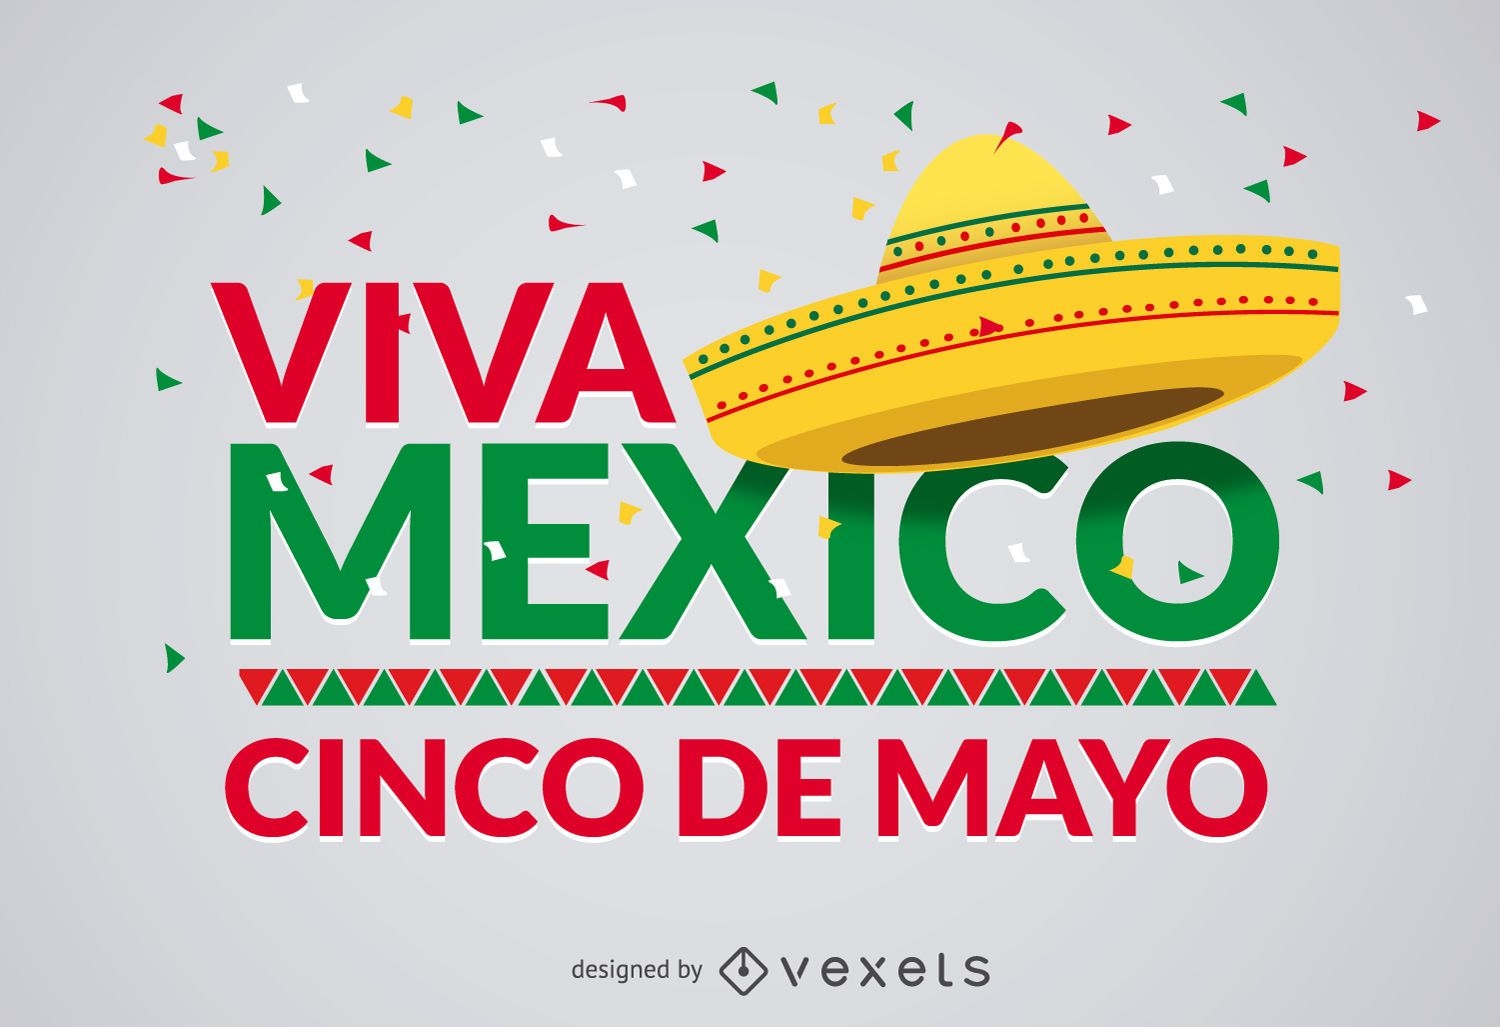 Projeto Cinco de Mayo Viva Mexico